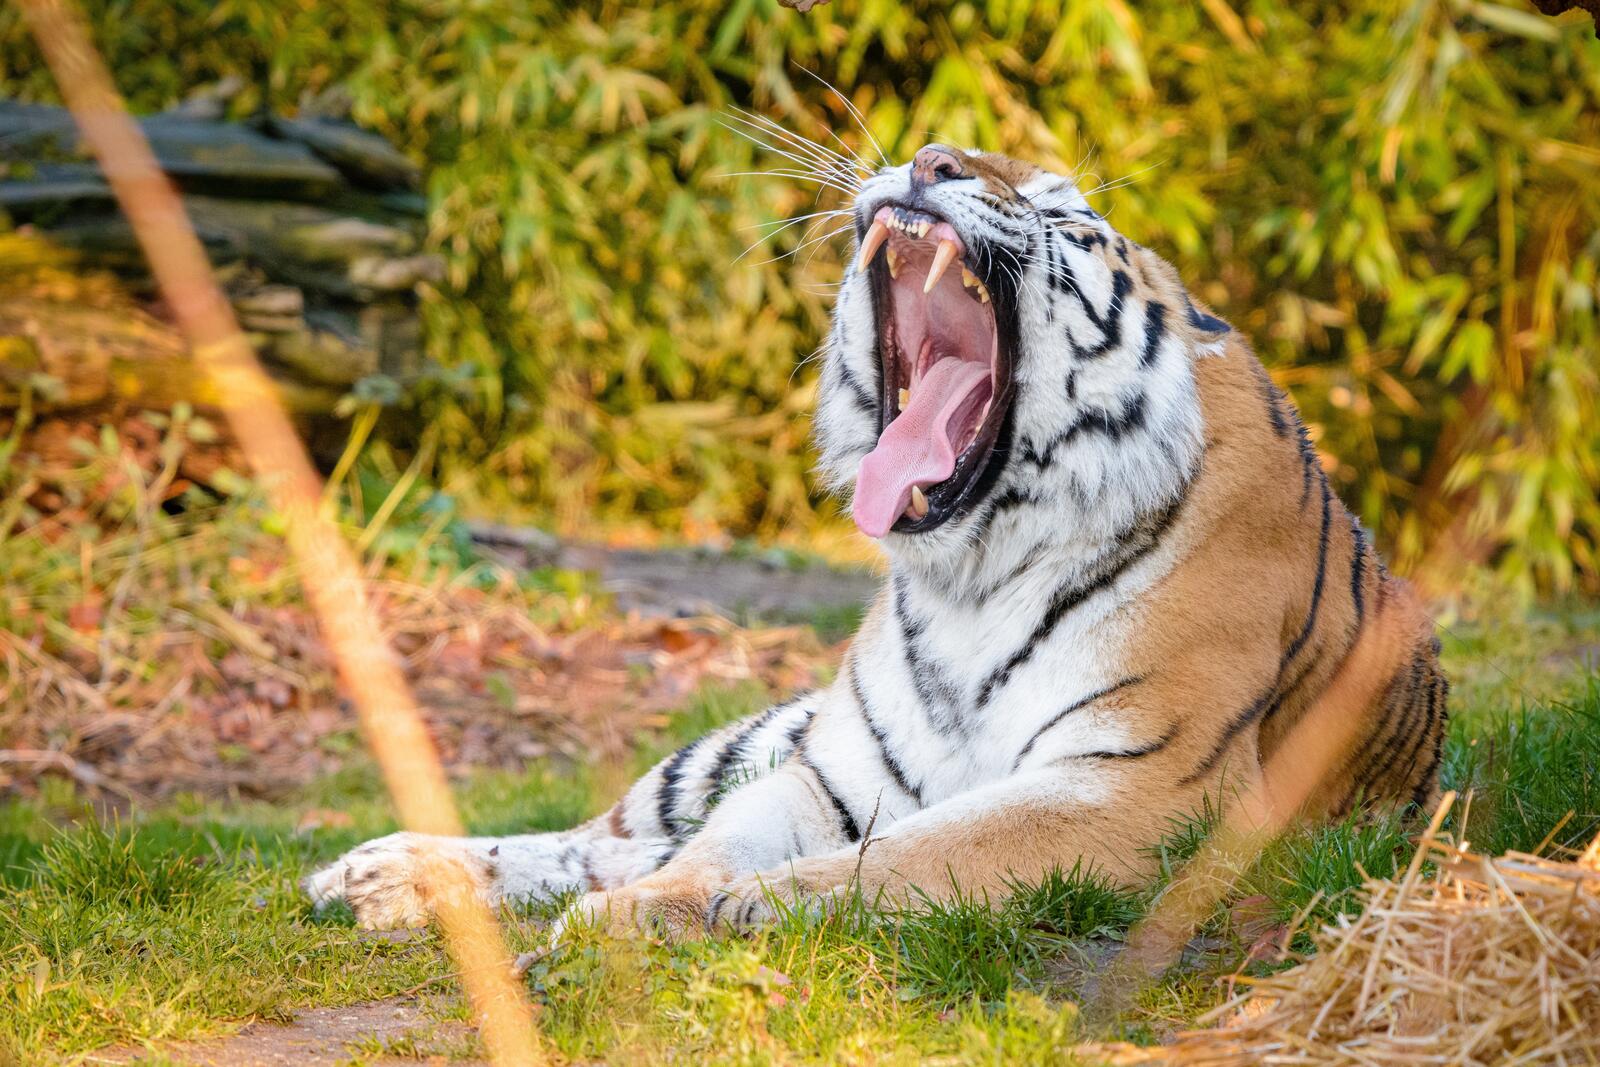 Free photo A sleepy tiger yawns on the grass near the bush